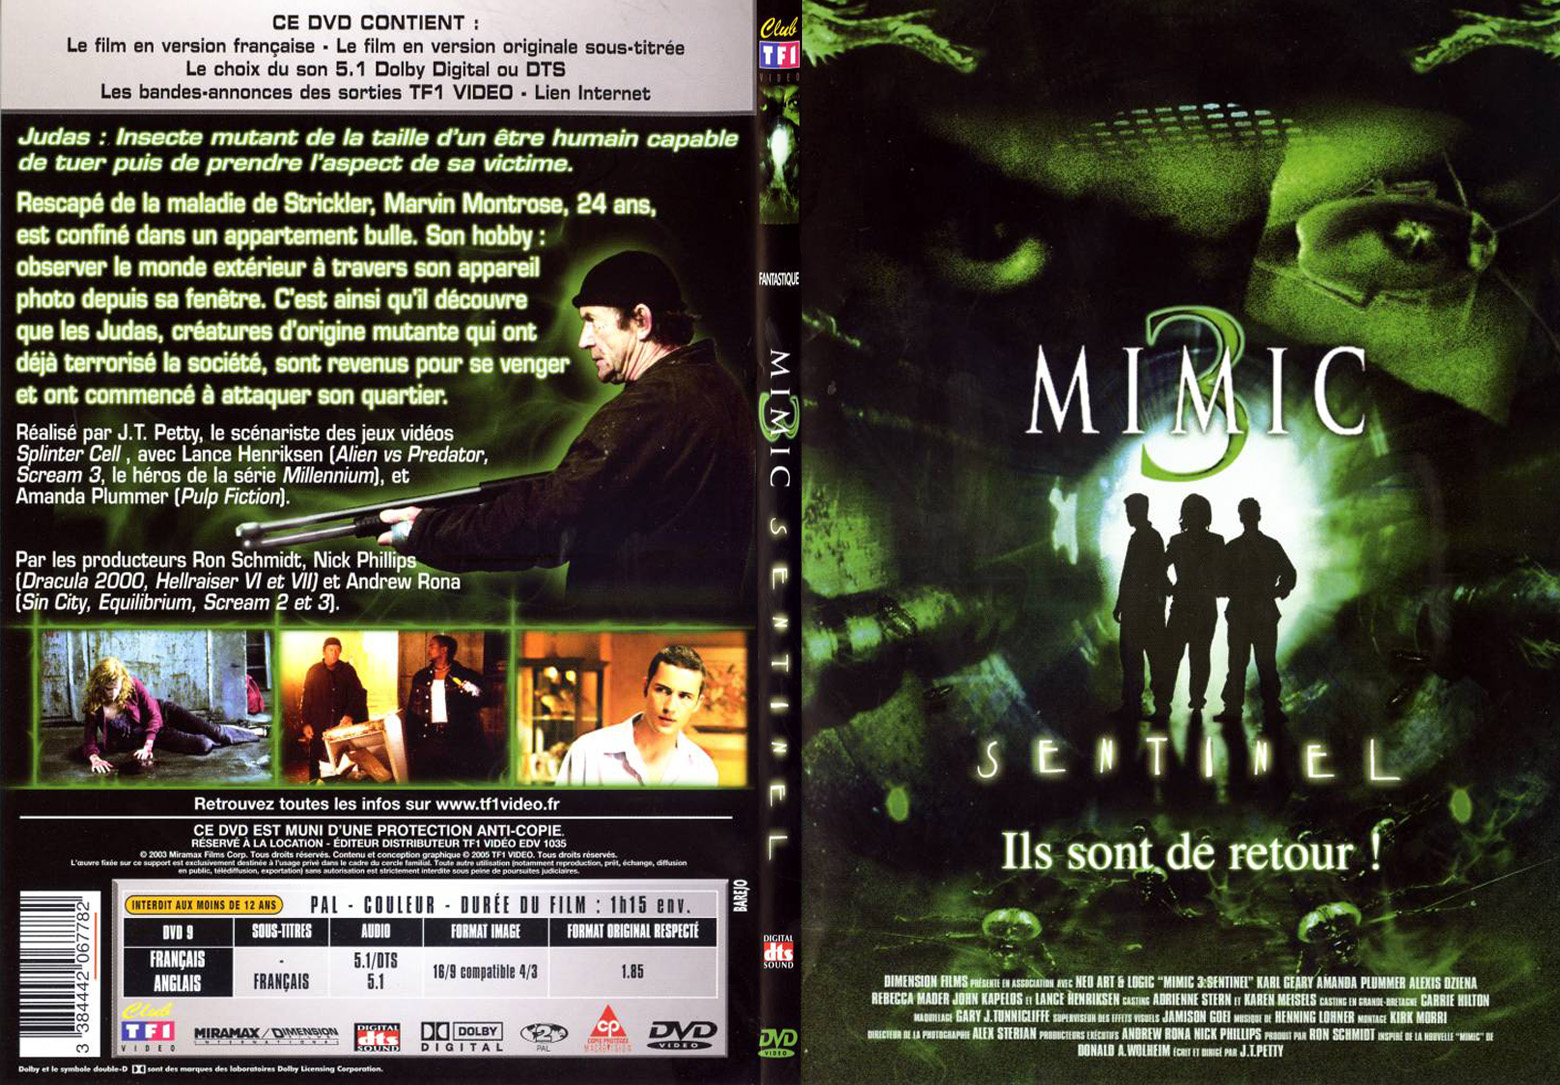 Jaquette DVD Mimic 3 - SLIM